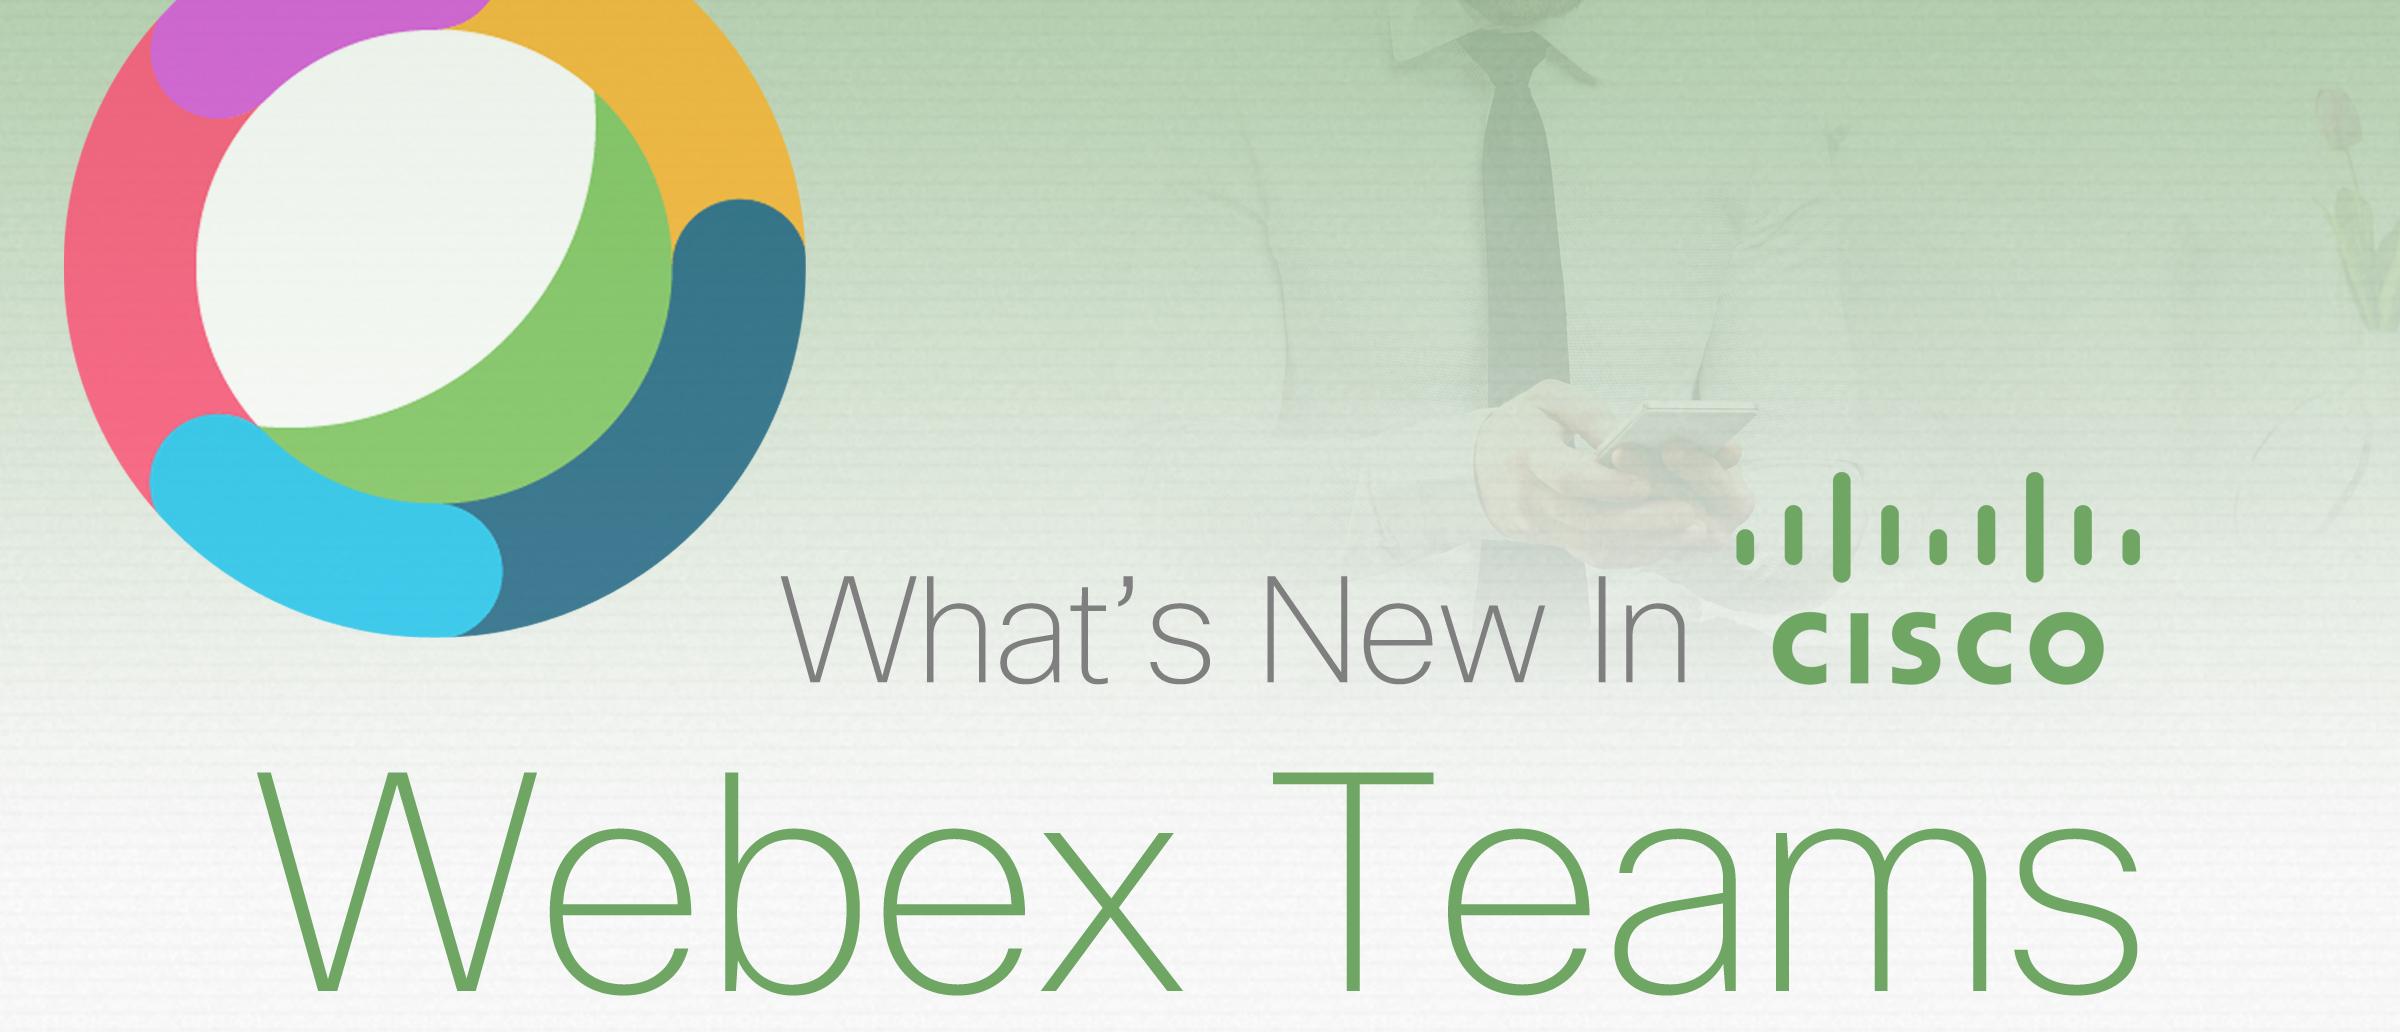 WebEx Team's Logo - Webex Teams Features's New In Webex Teams